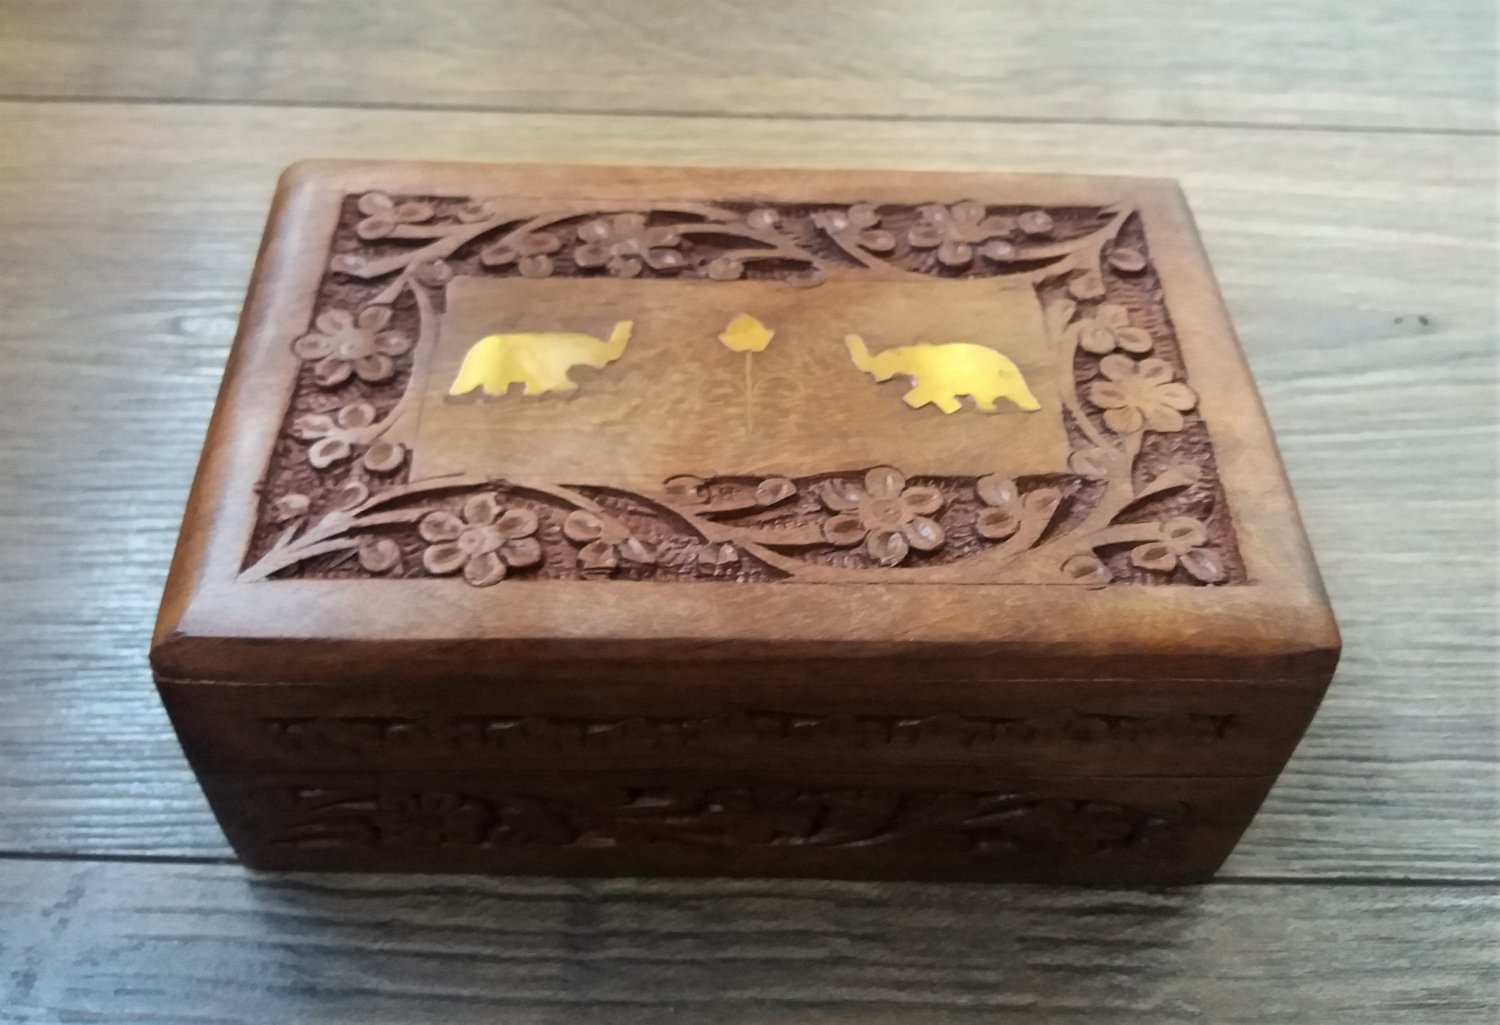 Handmade Wooden Box, Jewelry Box, Decorative Wooden Box